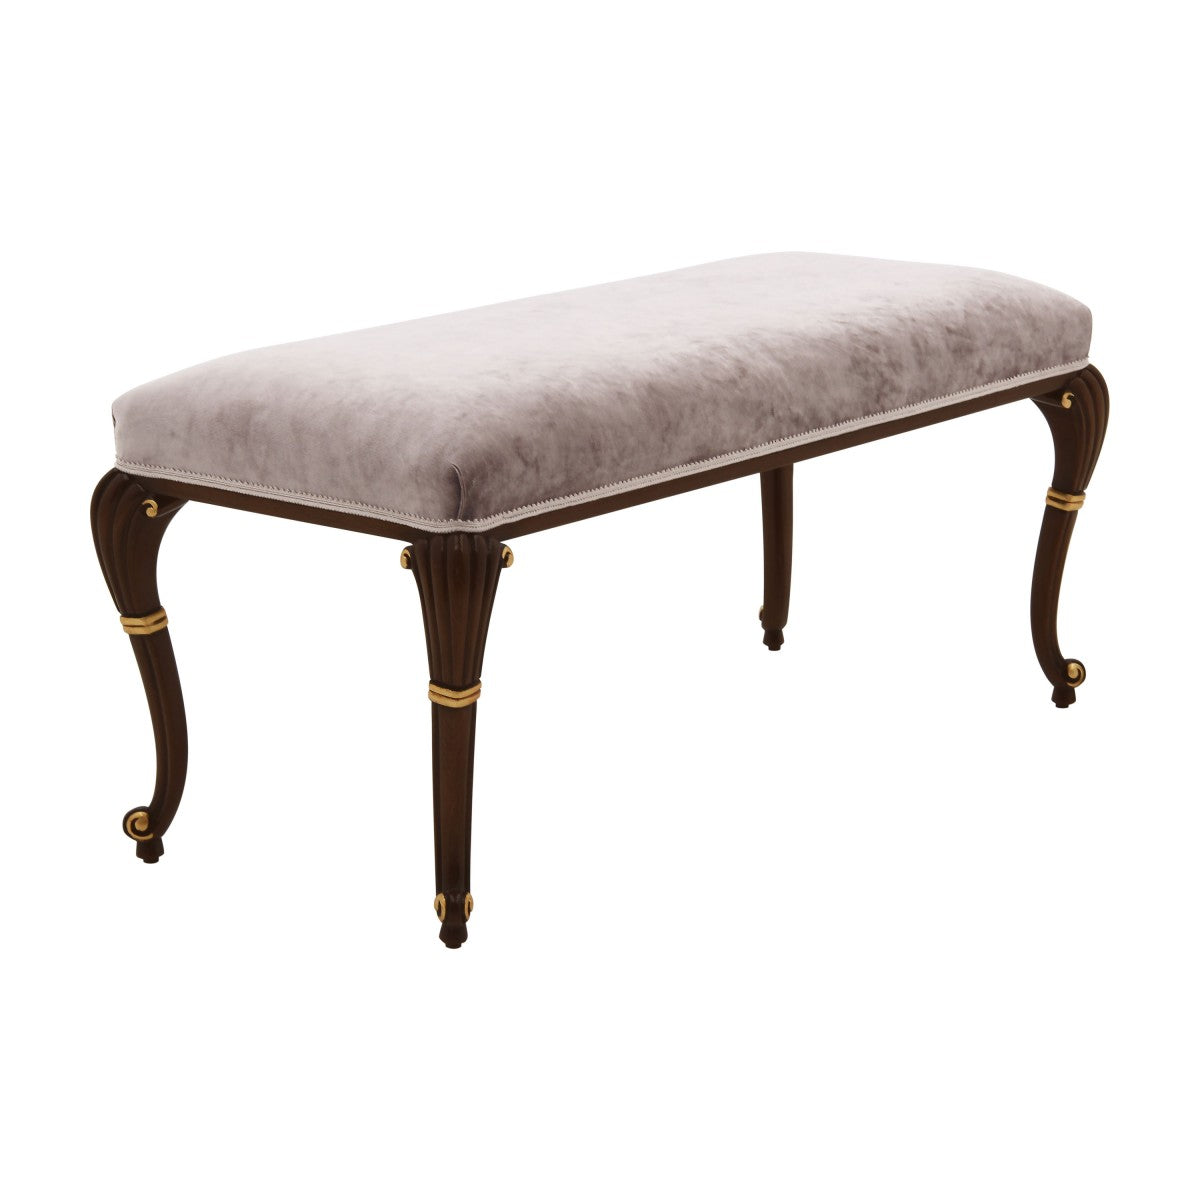 Anna Bespoke Upholstered Elegant Classic Style Bench MS183Q Custom Made To Order